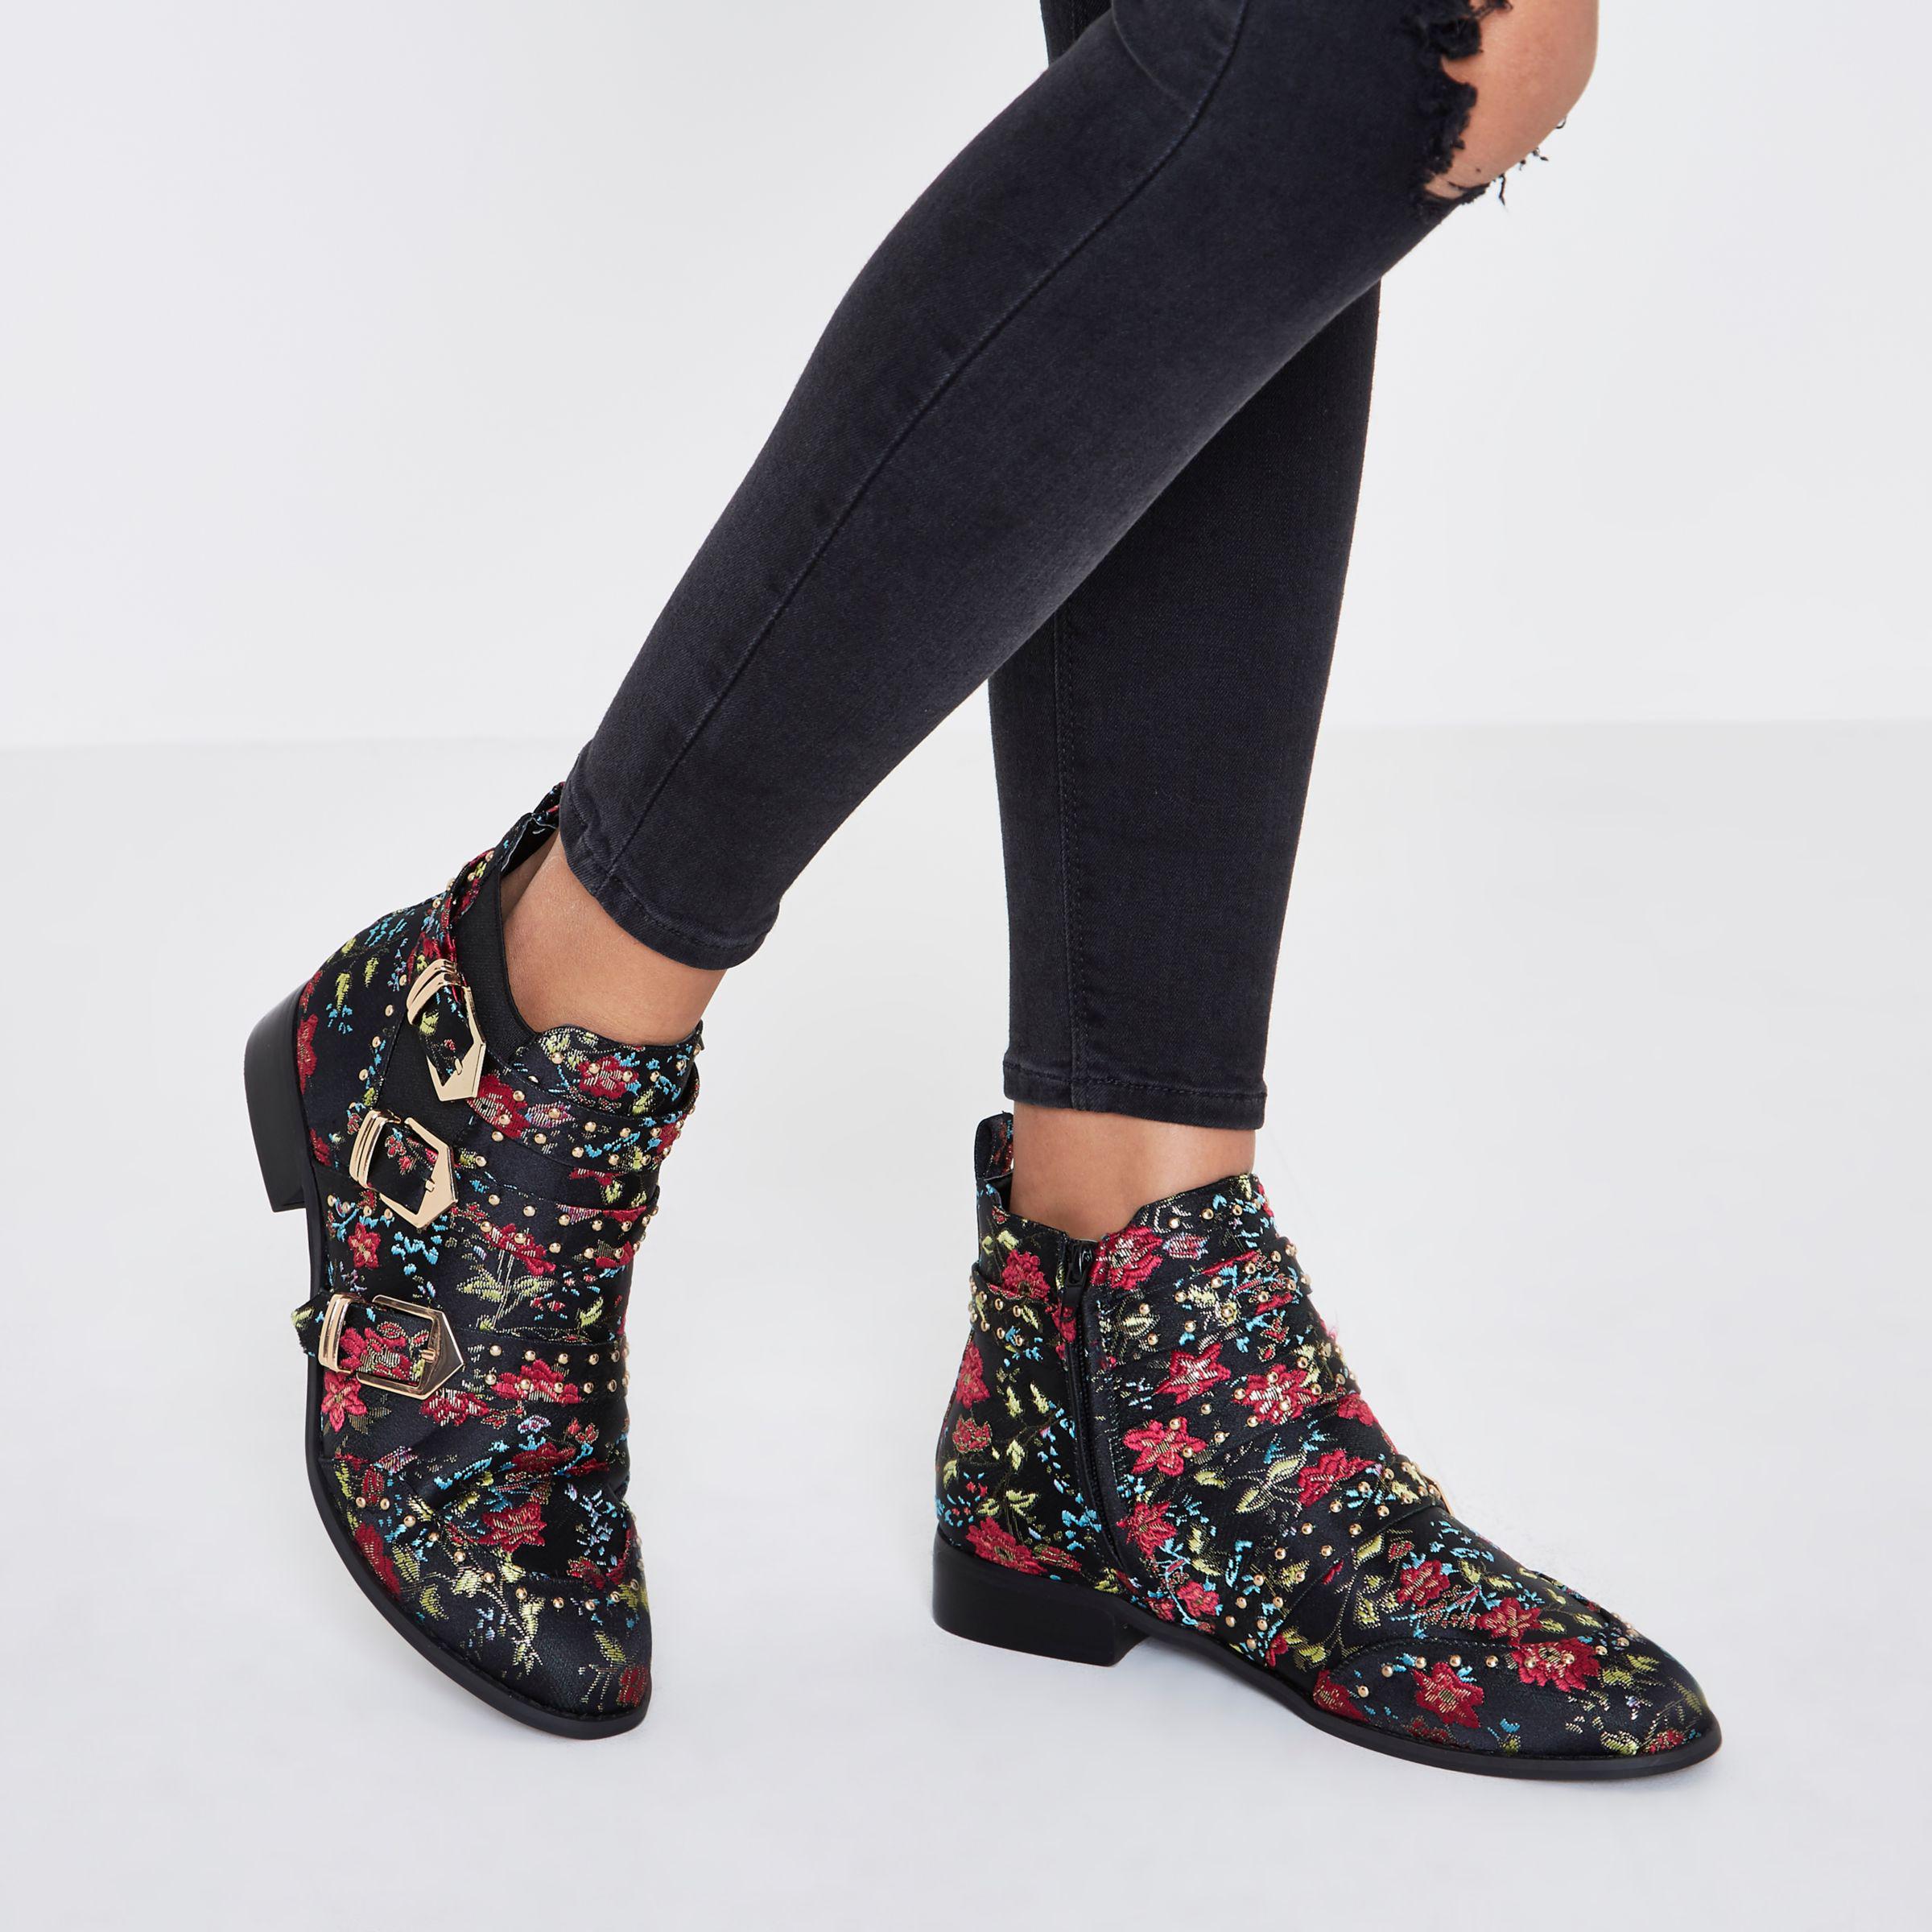 black floral ankle boots